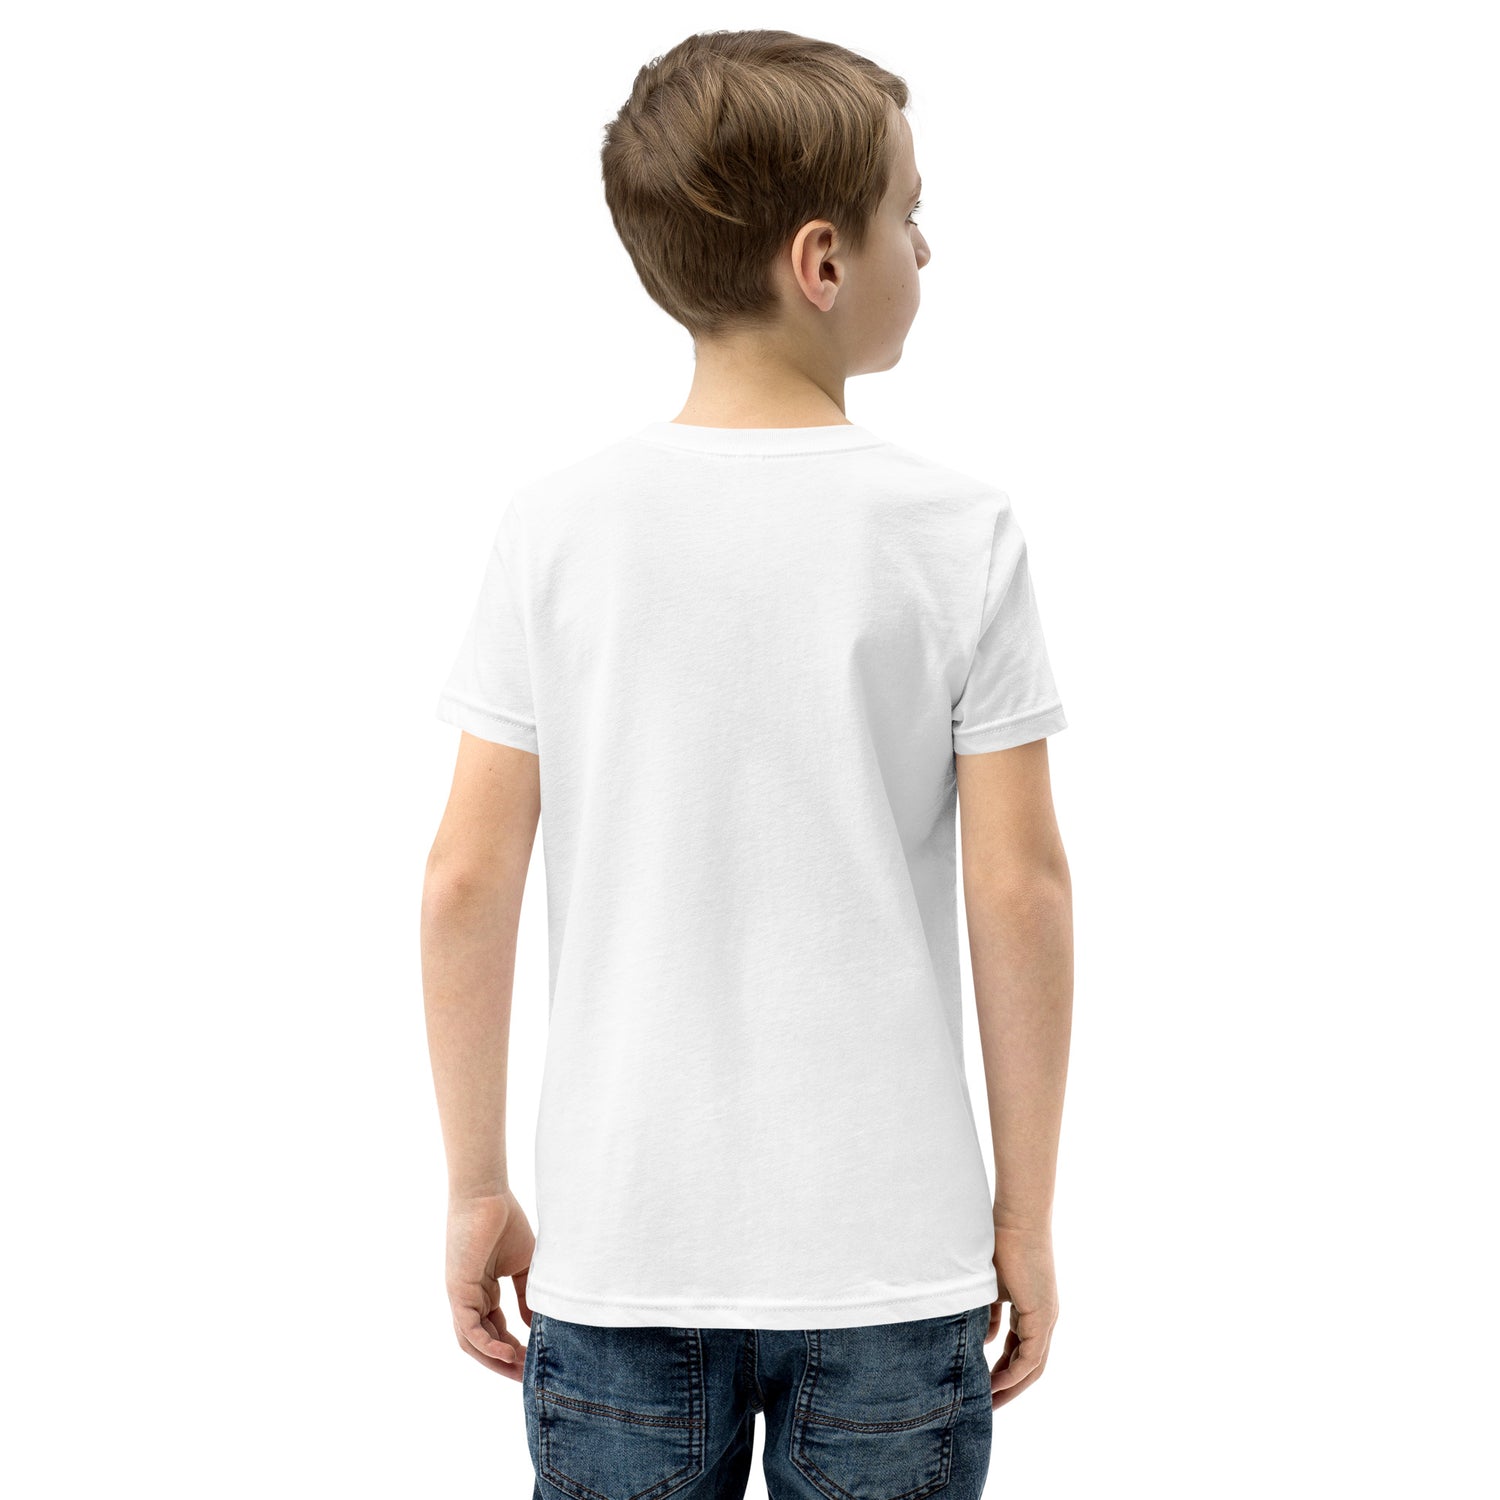 BGSM Youth Short Sleeve T-Shirt - BGSM BOUTIQUE 